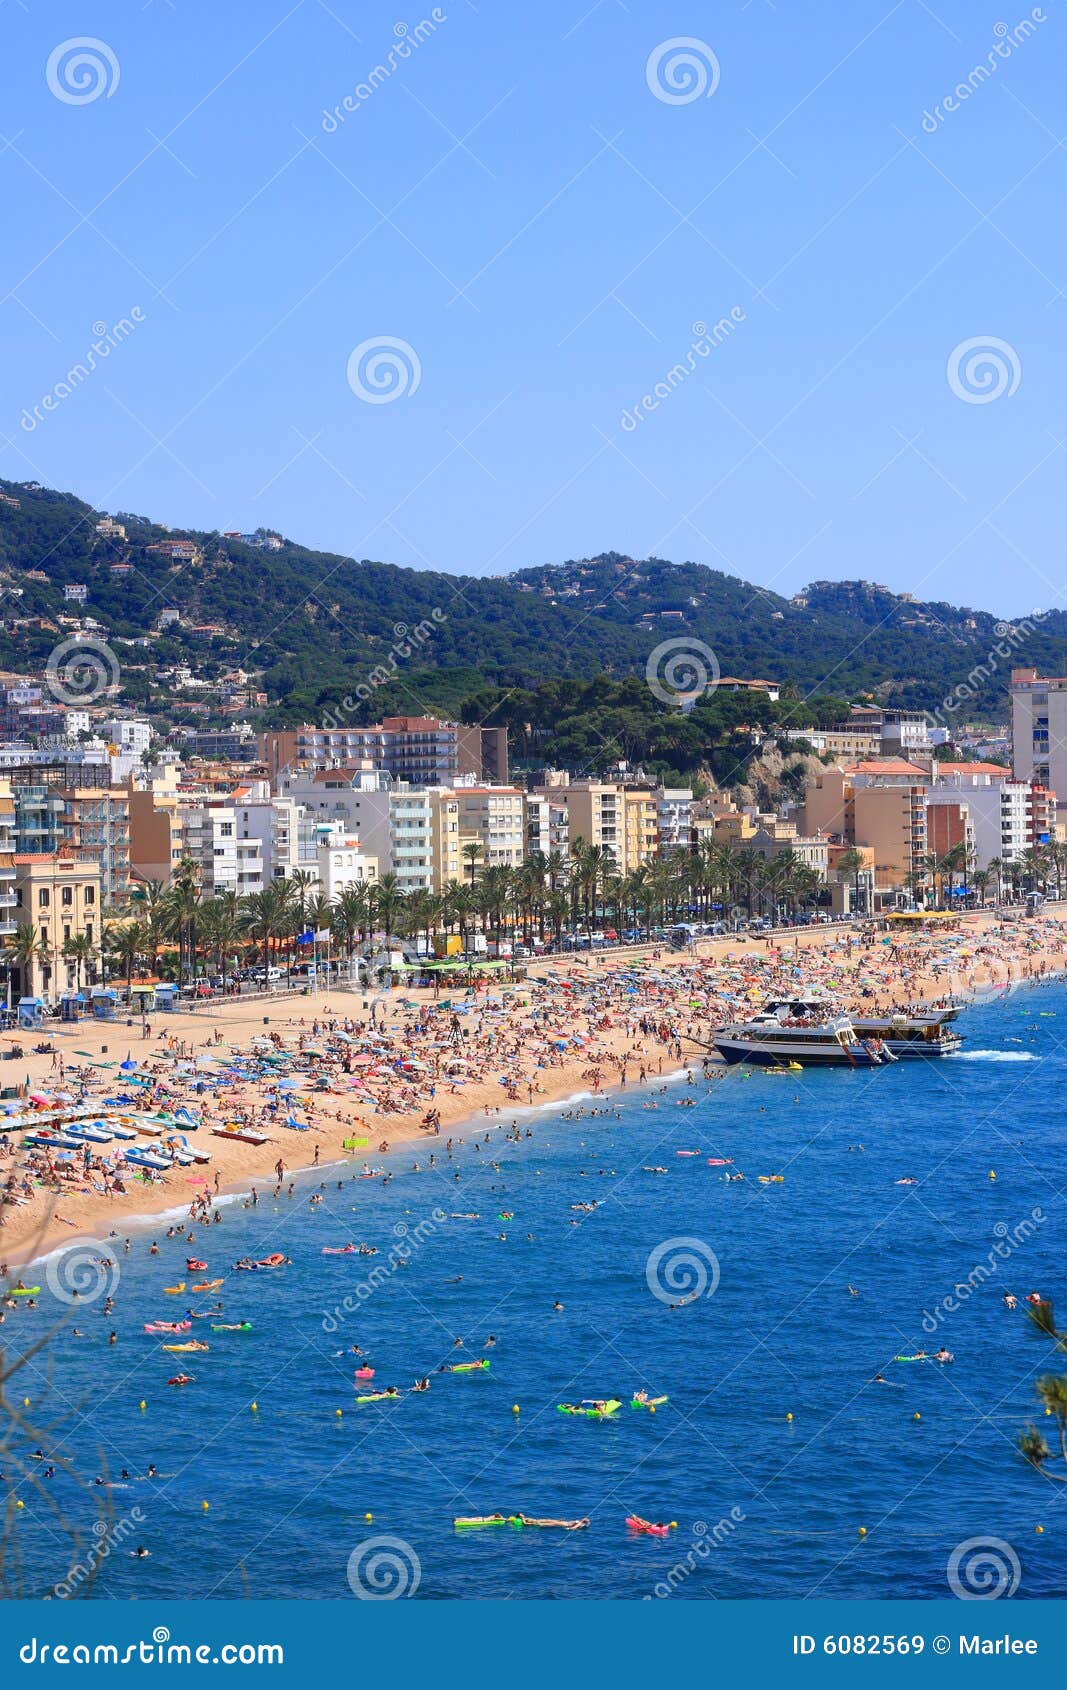 crowded beach (lloret de mar, costa brava, spain)